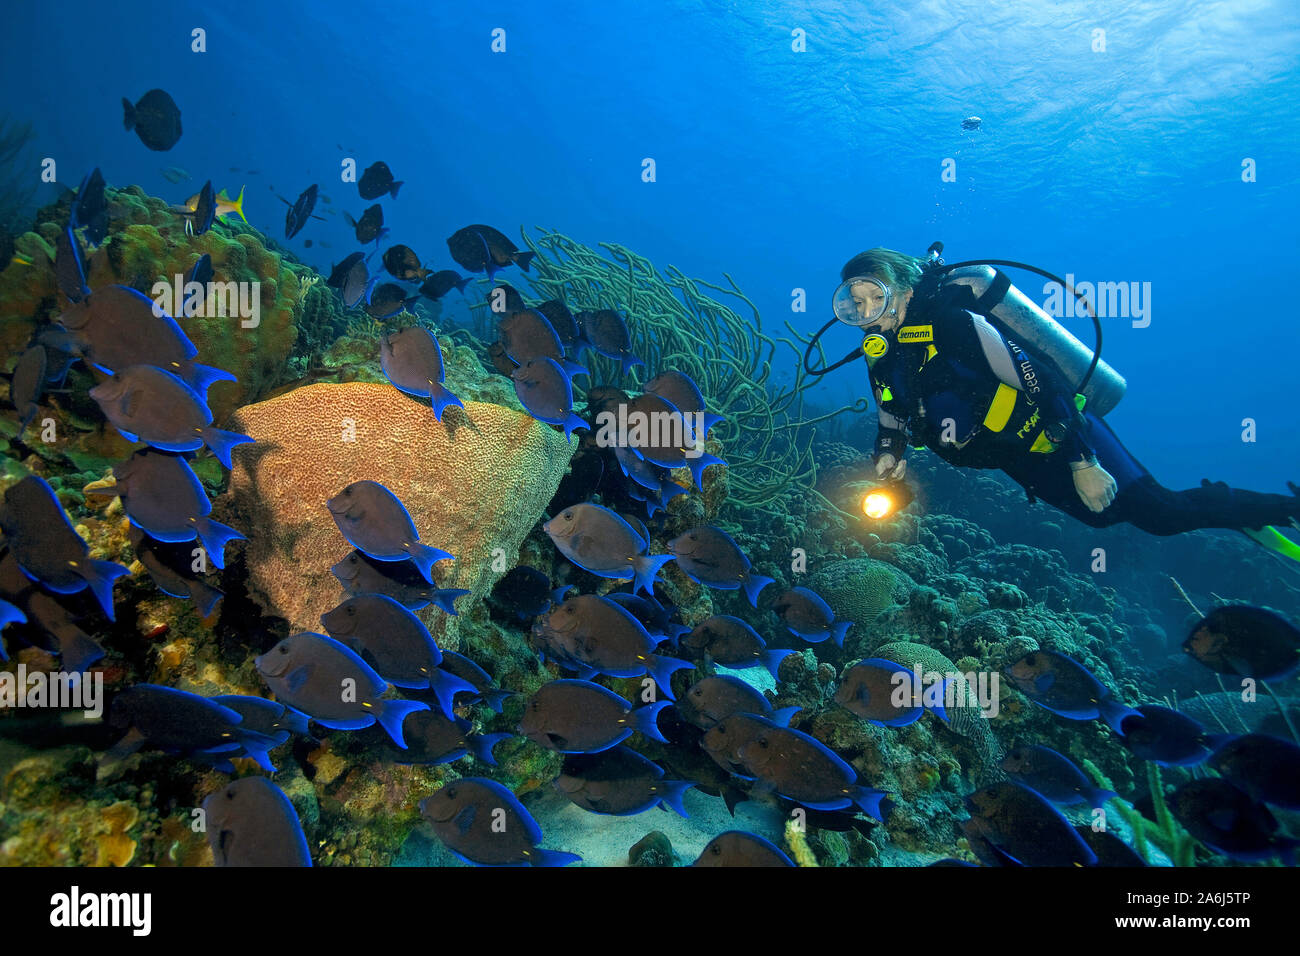 Scuba Diver orologi la linguetta blu (Acanthurus coeruleus), alimentando alg dai coralli, scogliera corallina caraibica, Bonaire, Antille olandesi Foto Stock